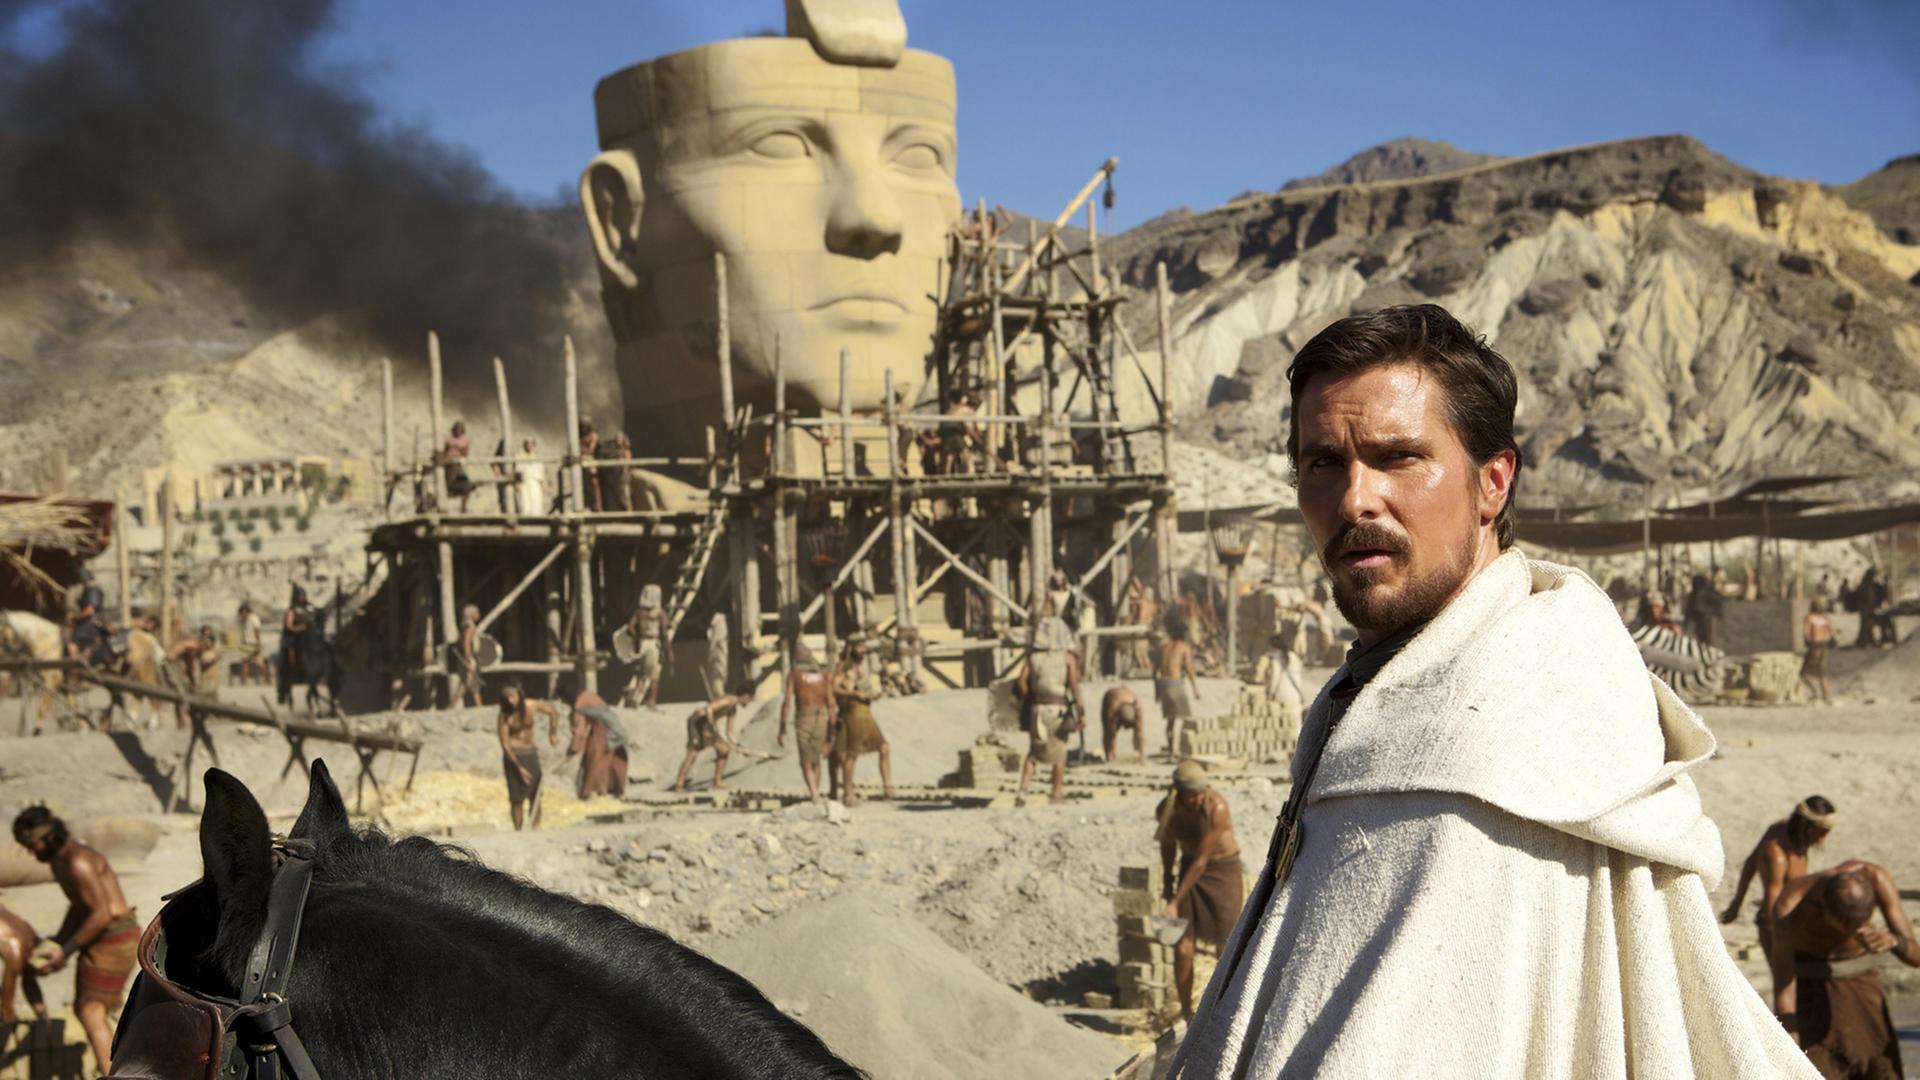 Christian Bale in Ridley Scotts Film "Exodus"